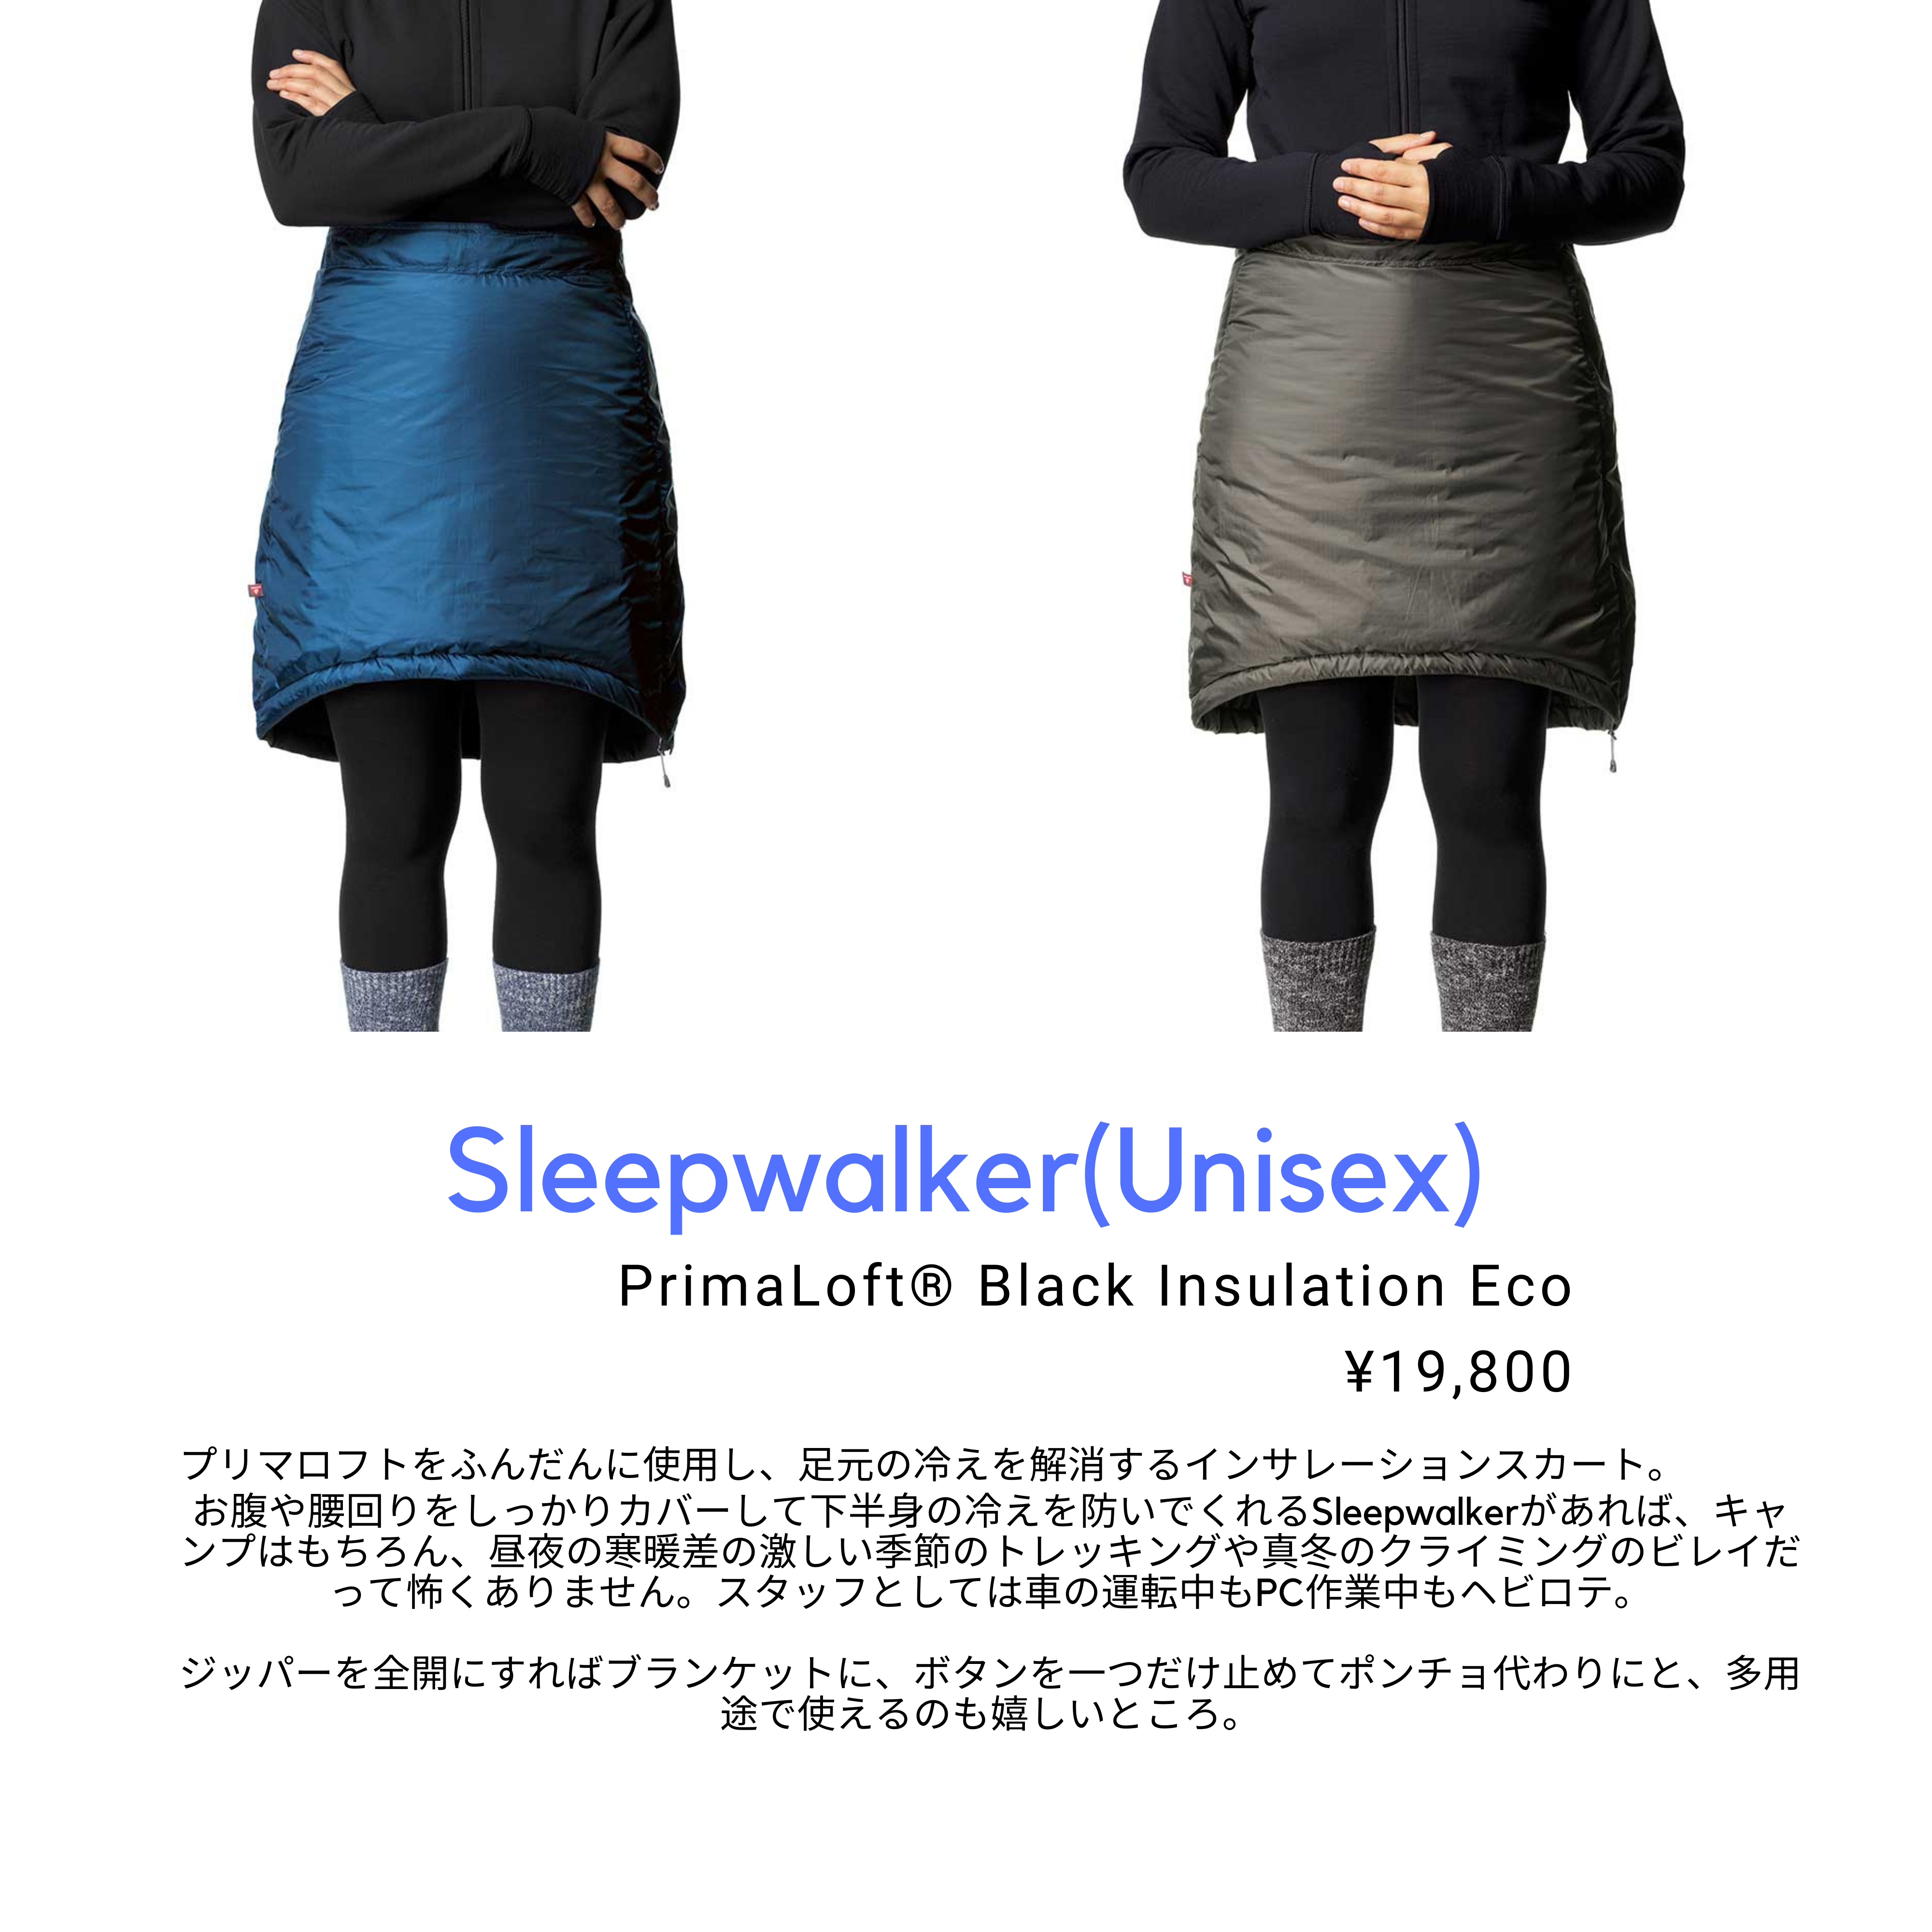 Sleepwalker(Unisex) PrimaLoft® Black Insulation Eco